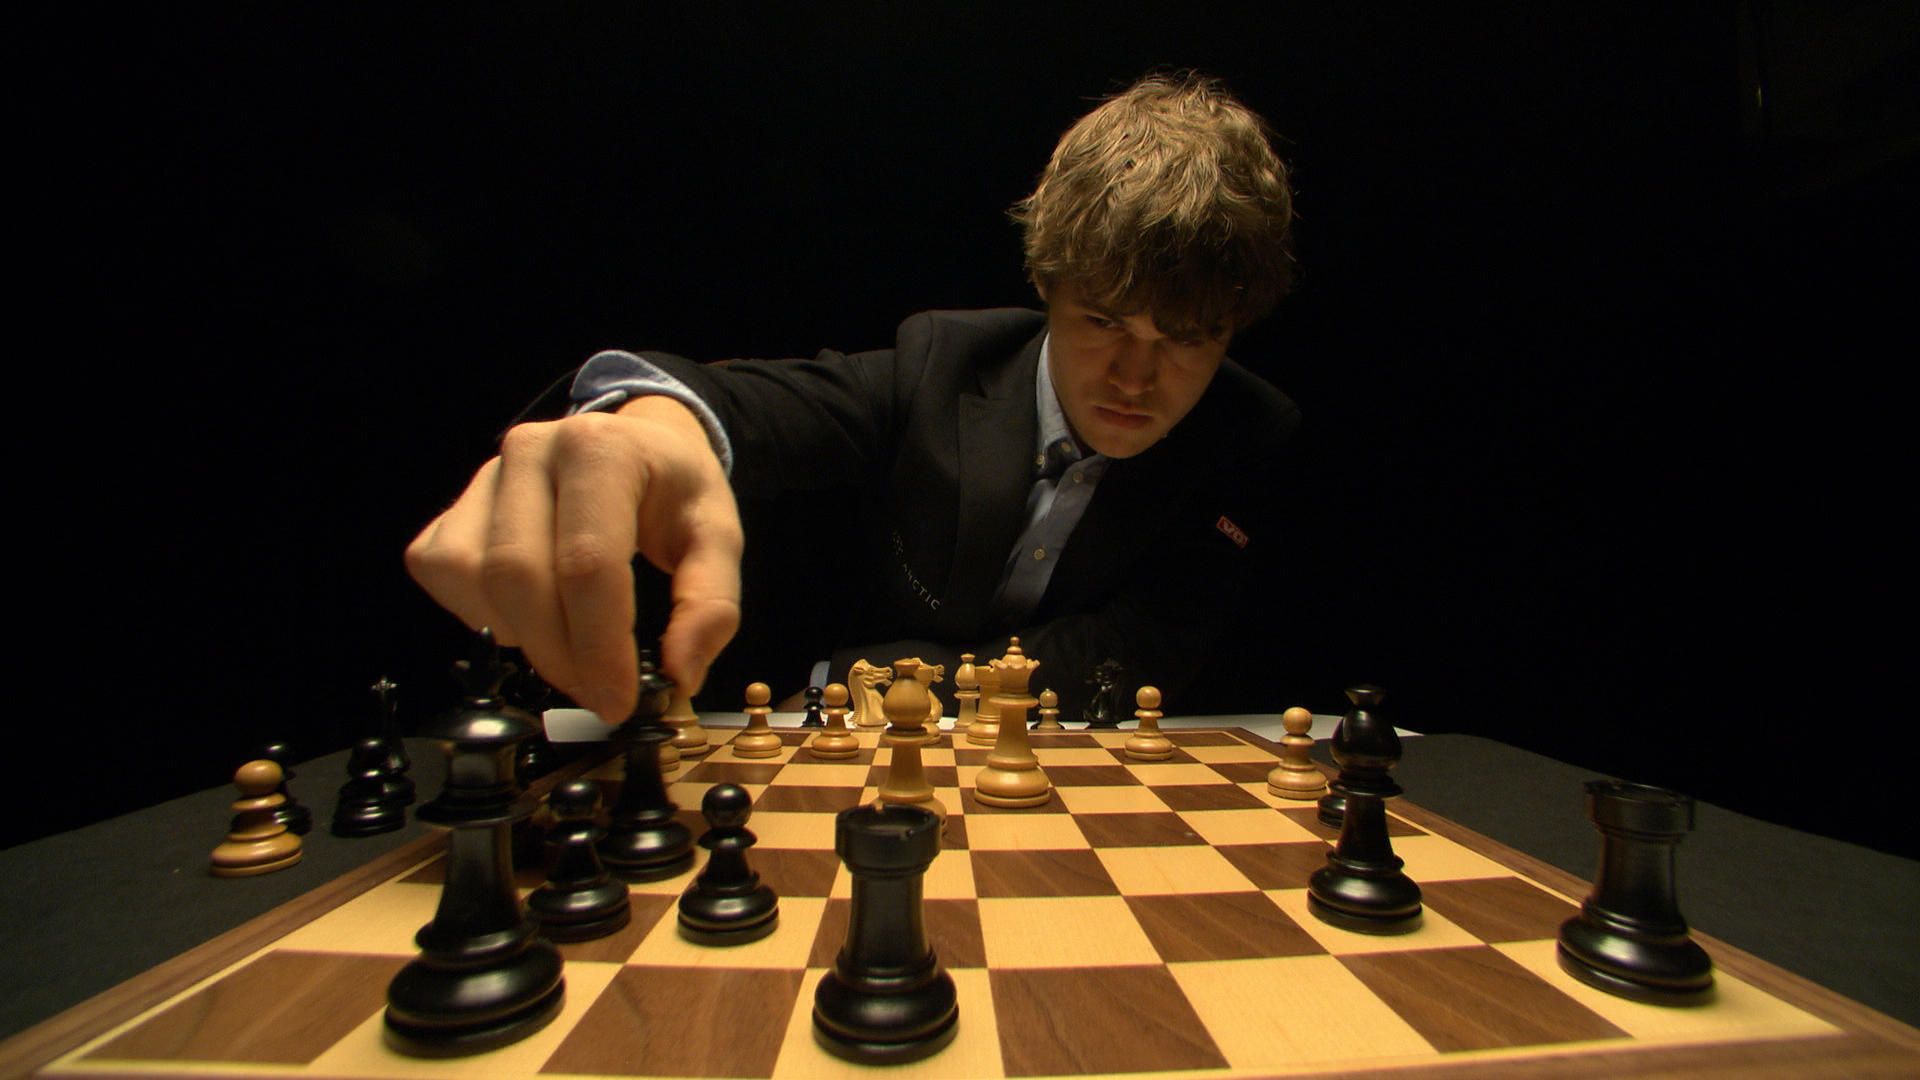 Ребята шахматы играют. Карлсен шахматы 960. Магнус Карлсен обои. Магнус Чесс. Игра шахматы.